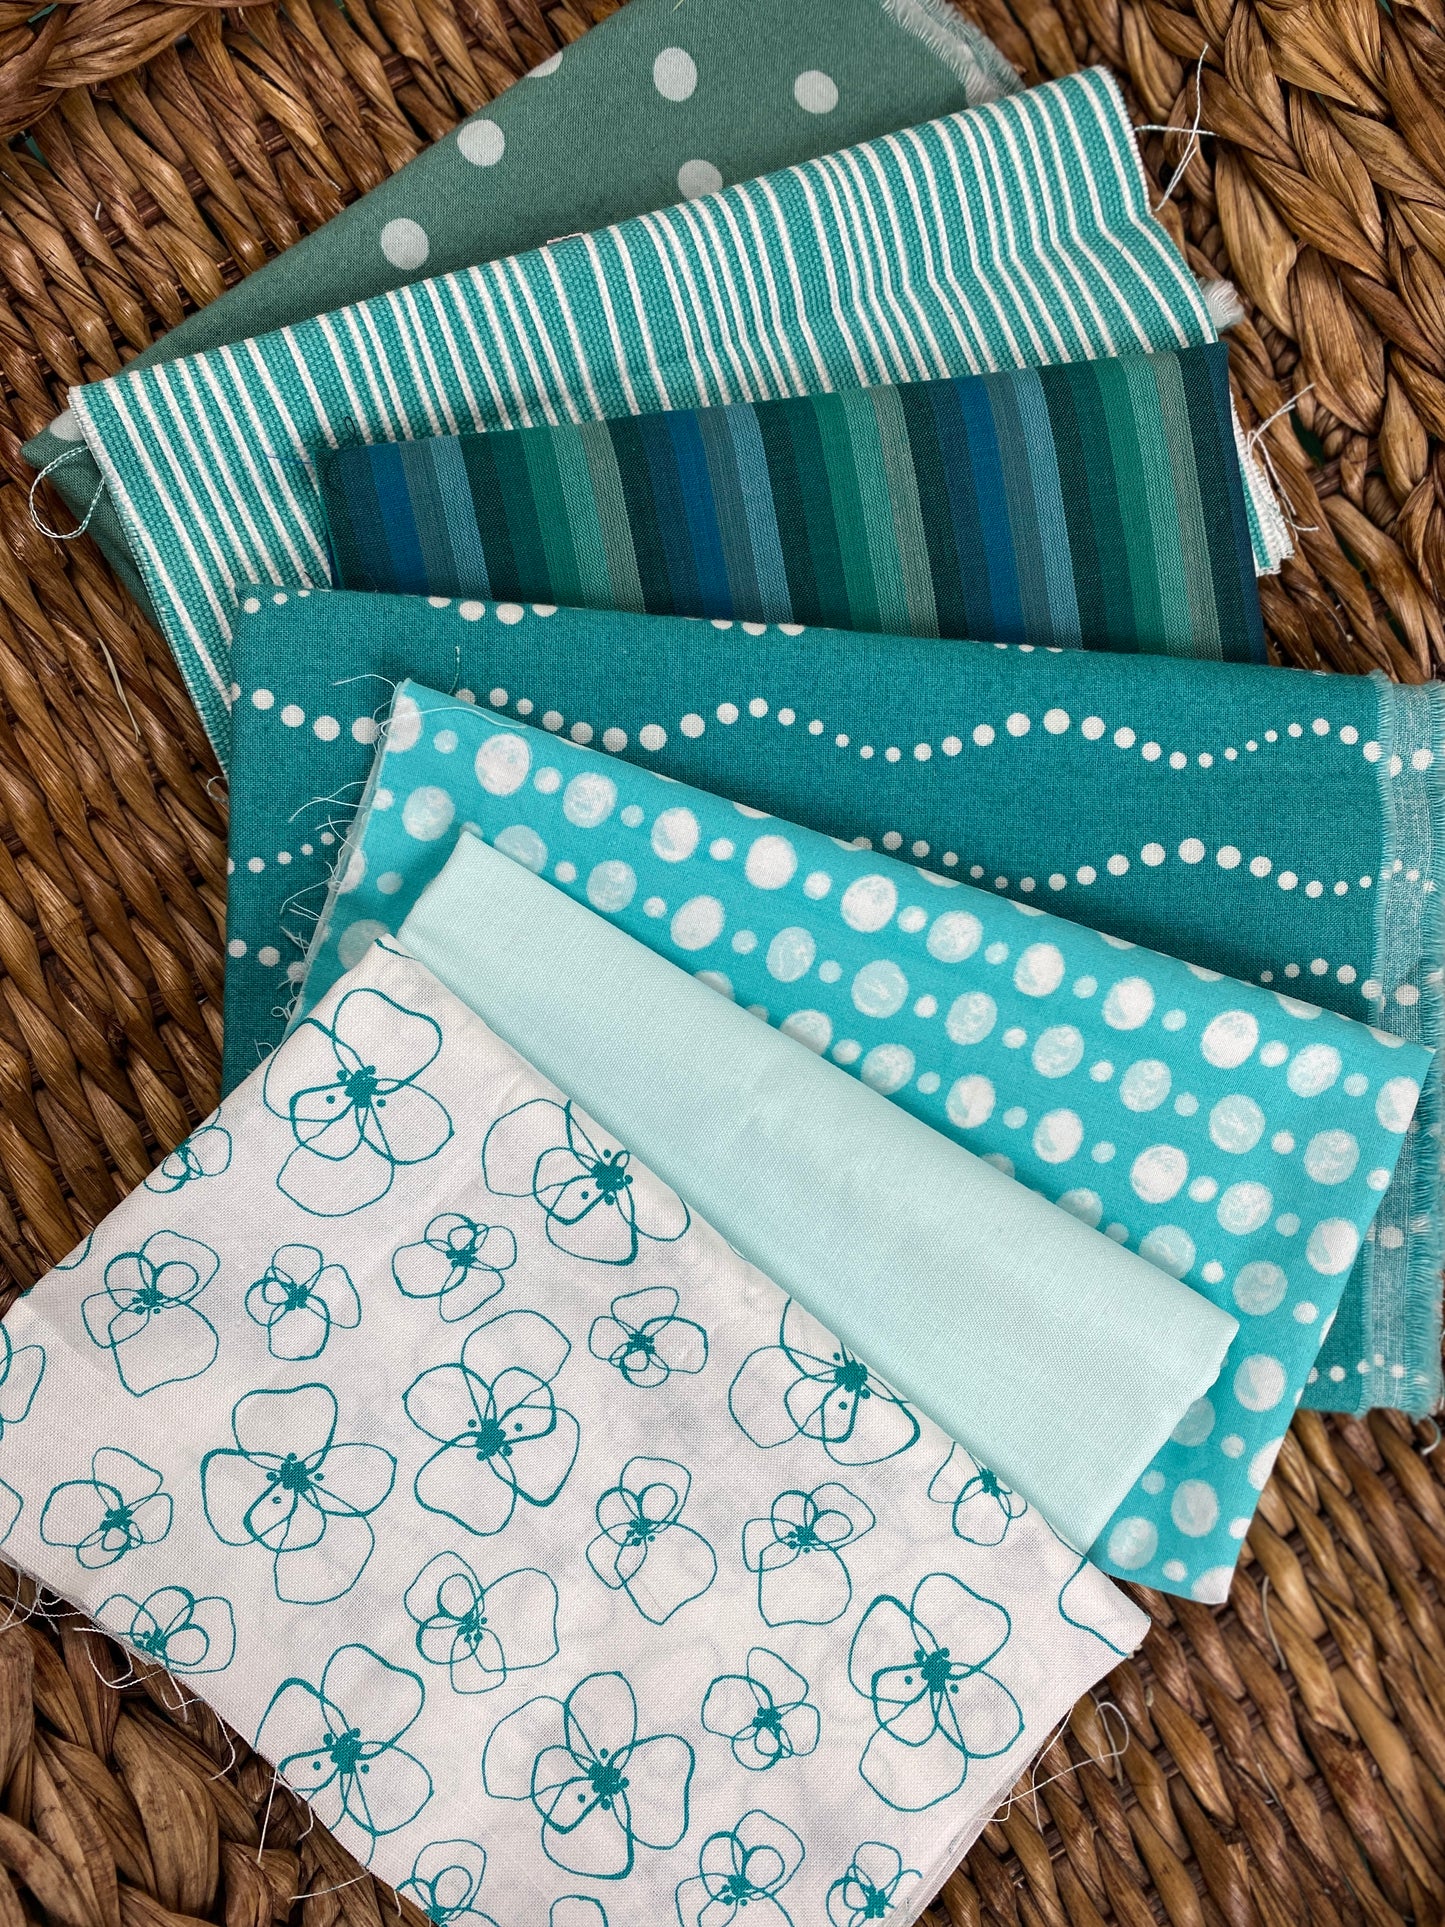 Fabric Bundle - Stash Builder Blue/Green